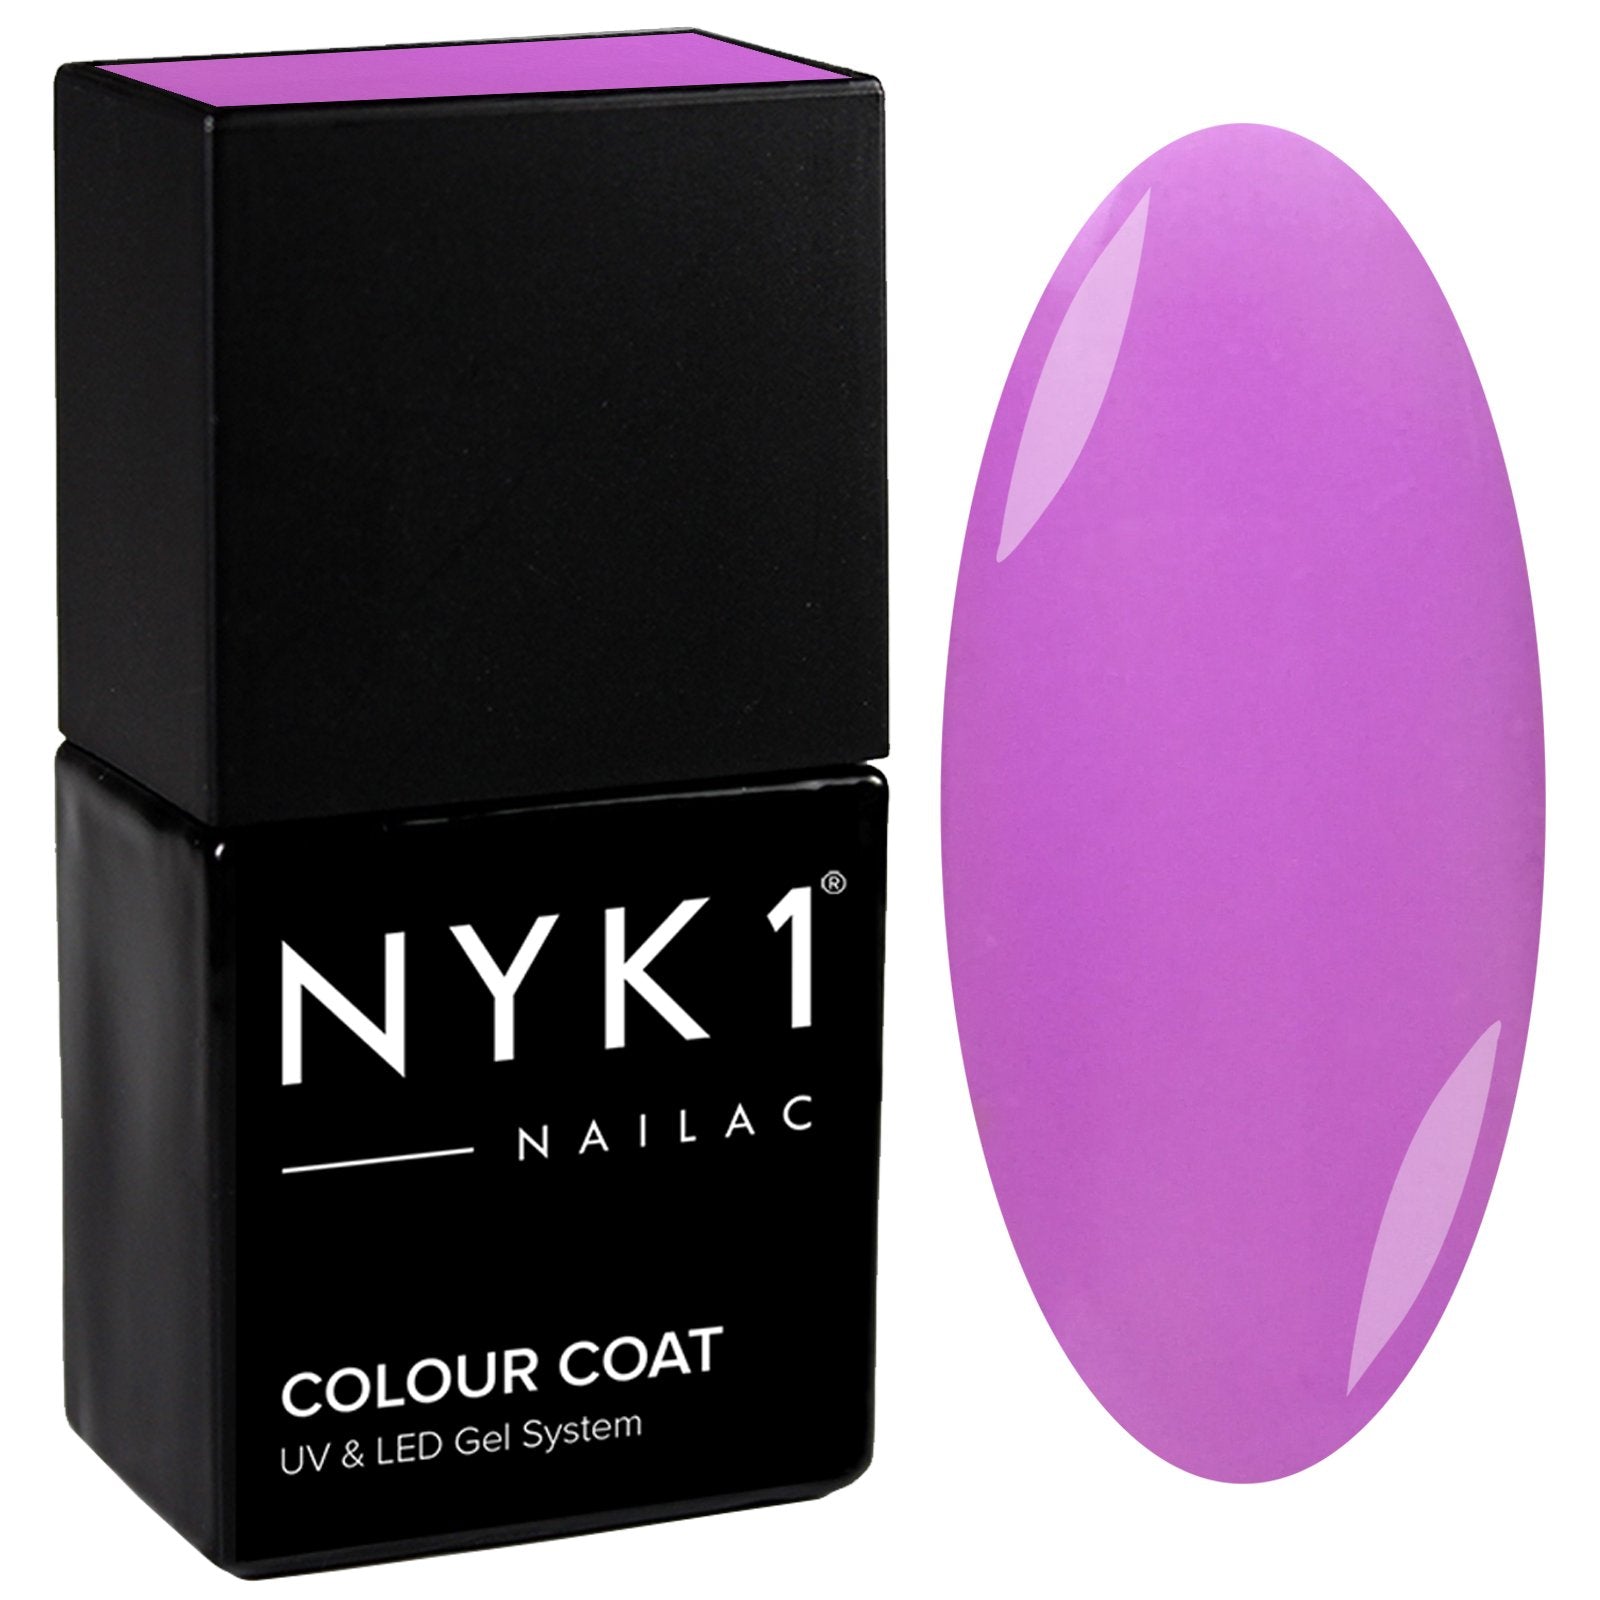 NYK1 Nailac Violetta Light Purple Gel Nail Polish